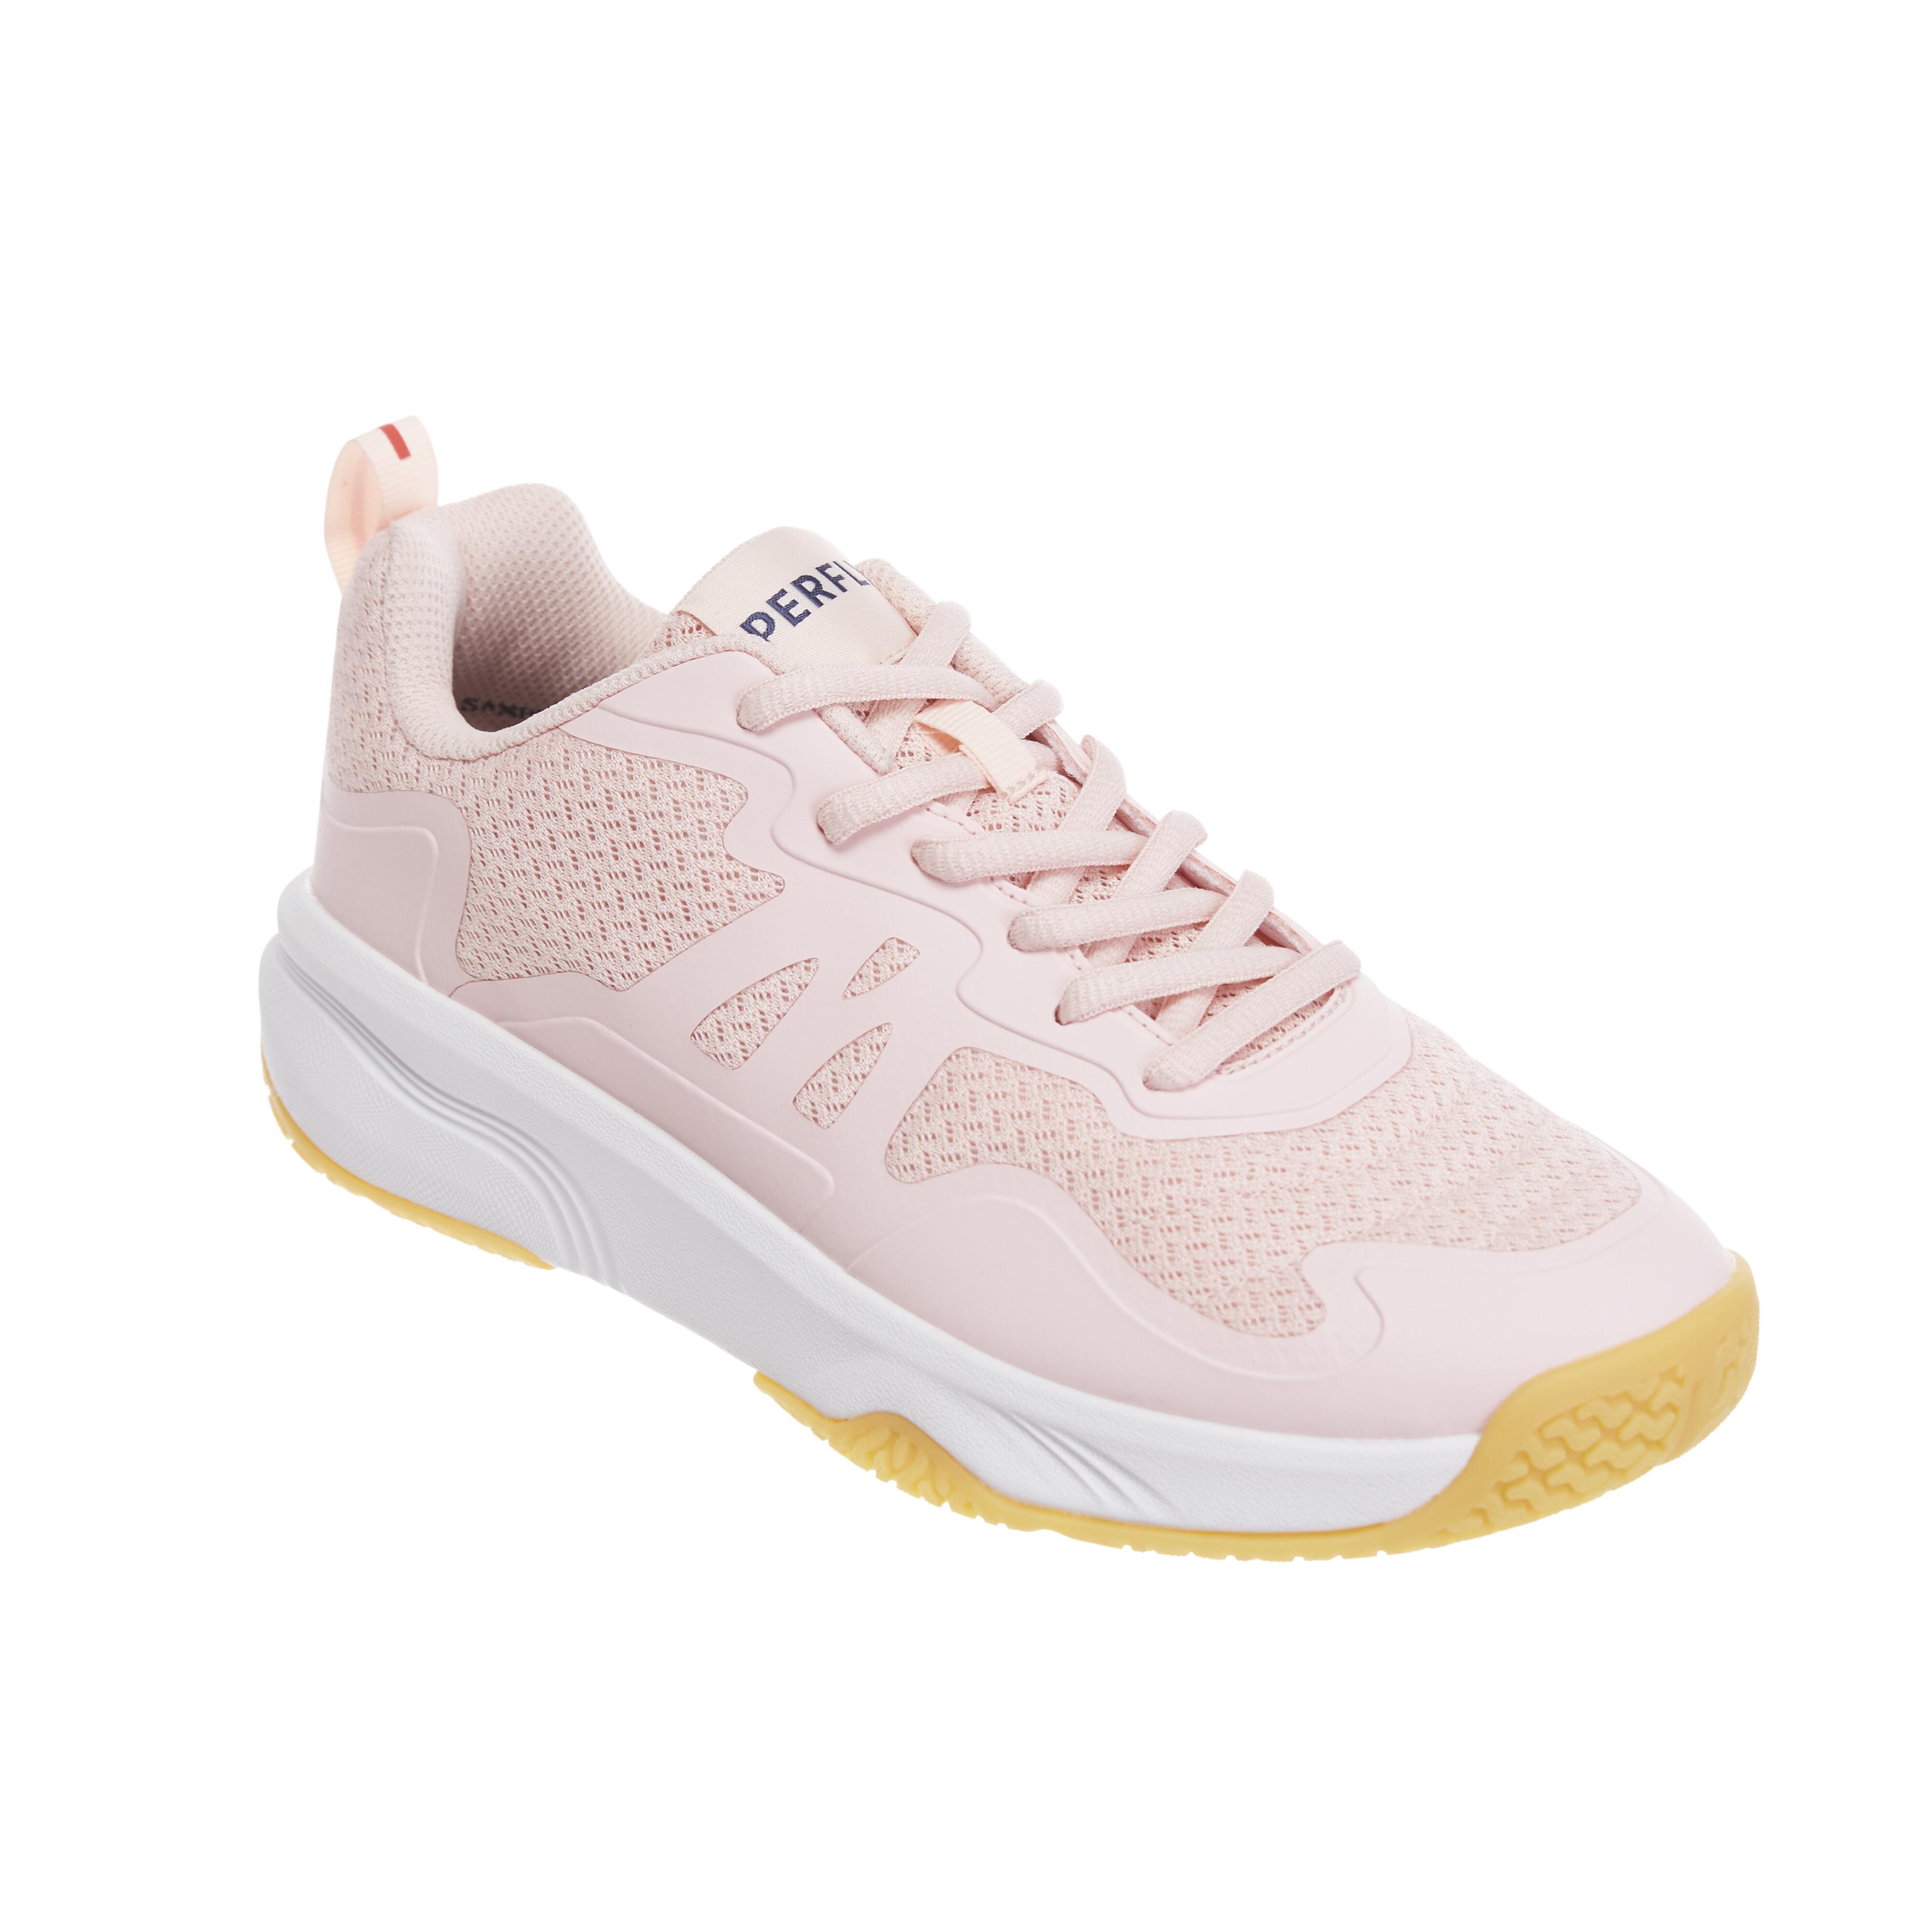 Image of Women’s Badminton Shoes - BS Sensation 530 Pink